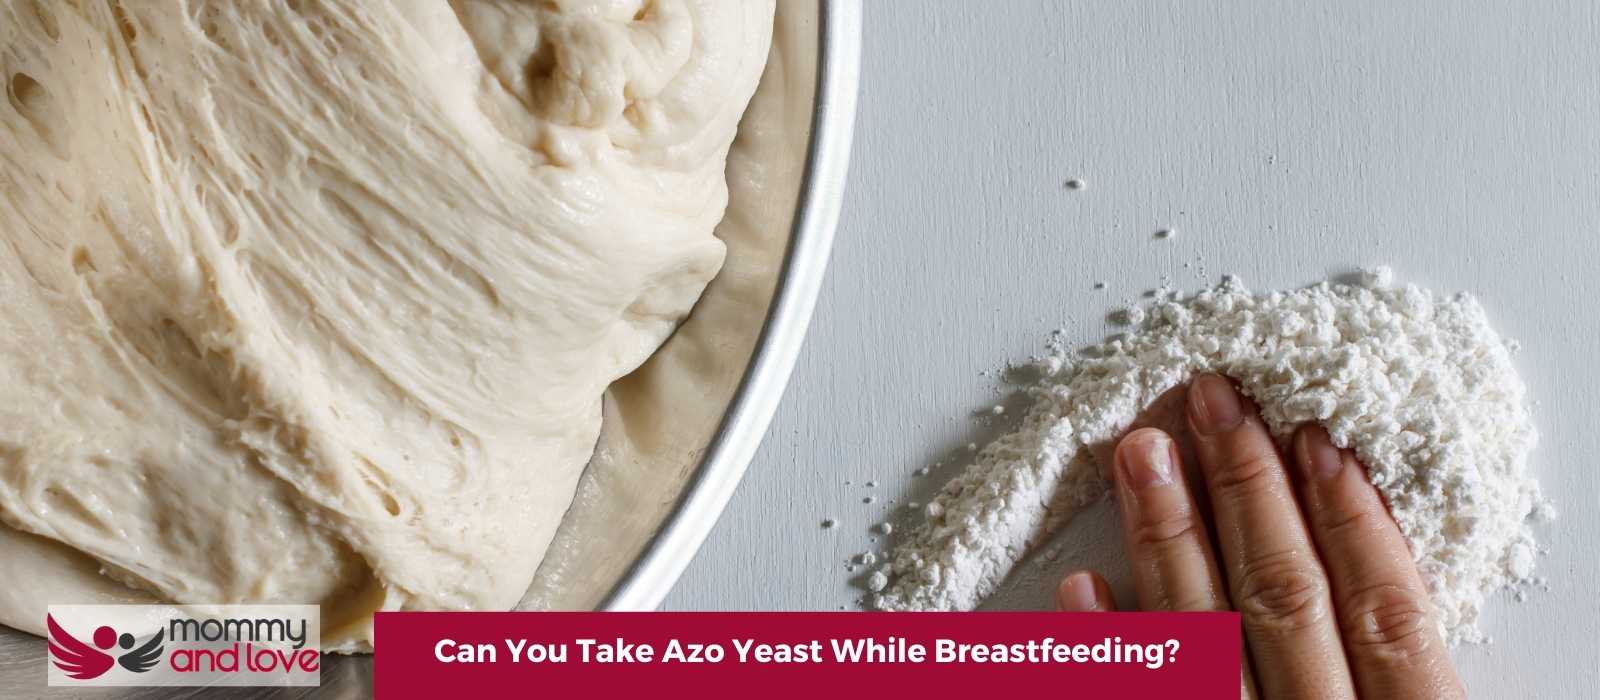 Can You Take Azo Yeast While Breastfeeding?